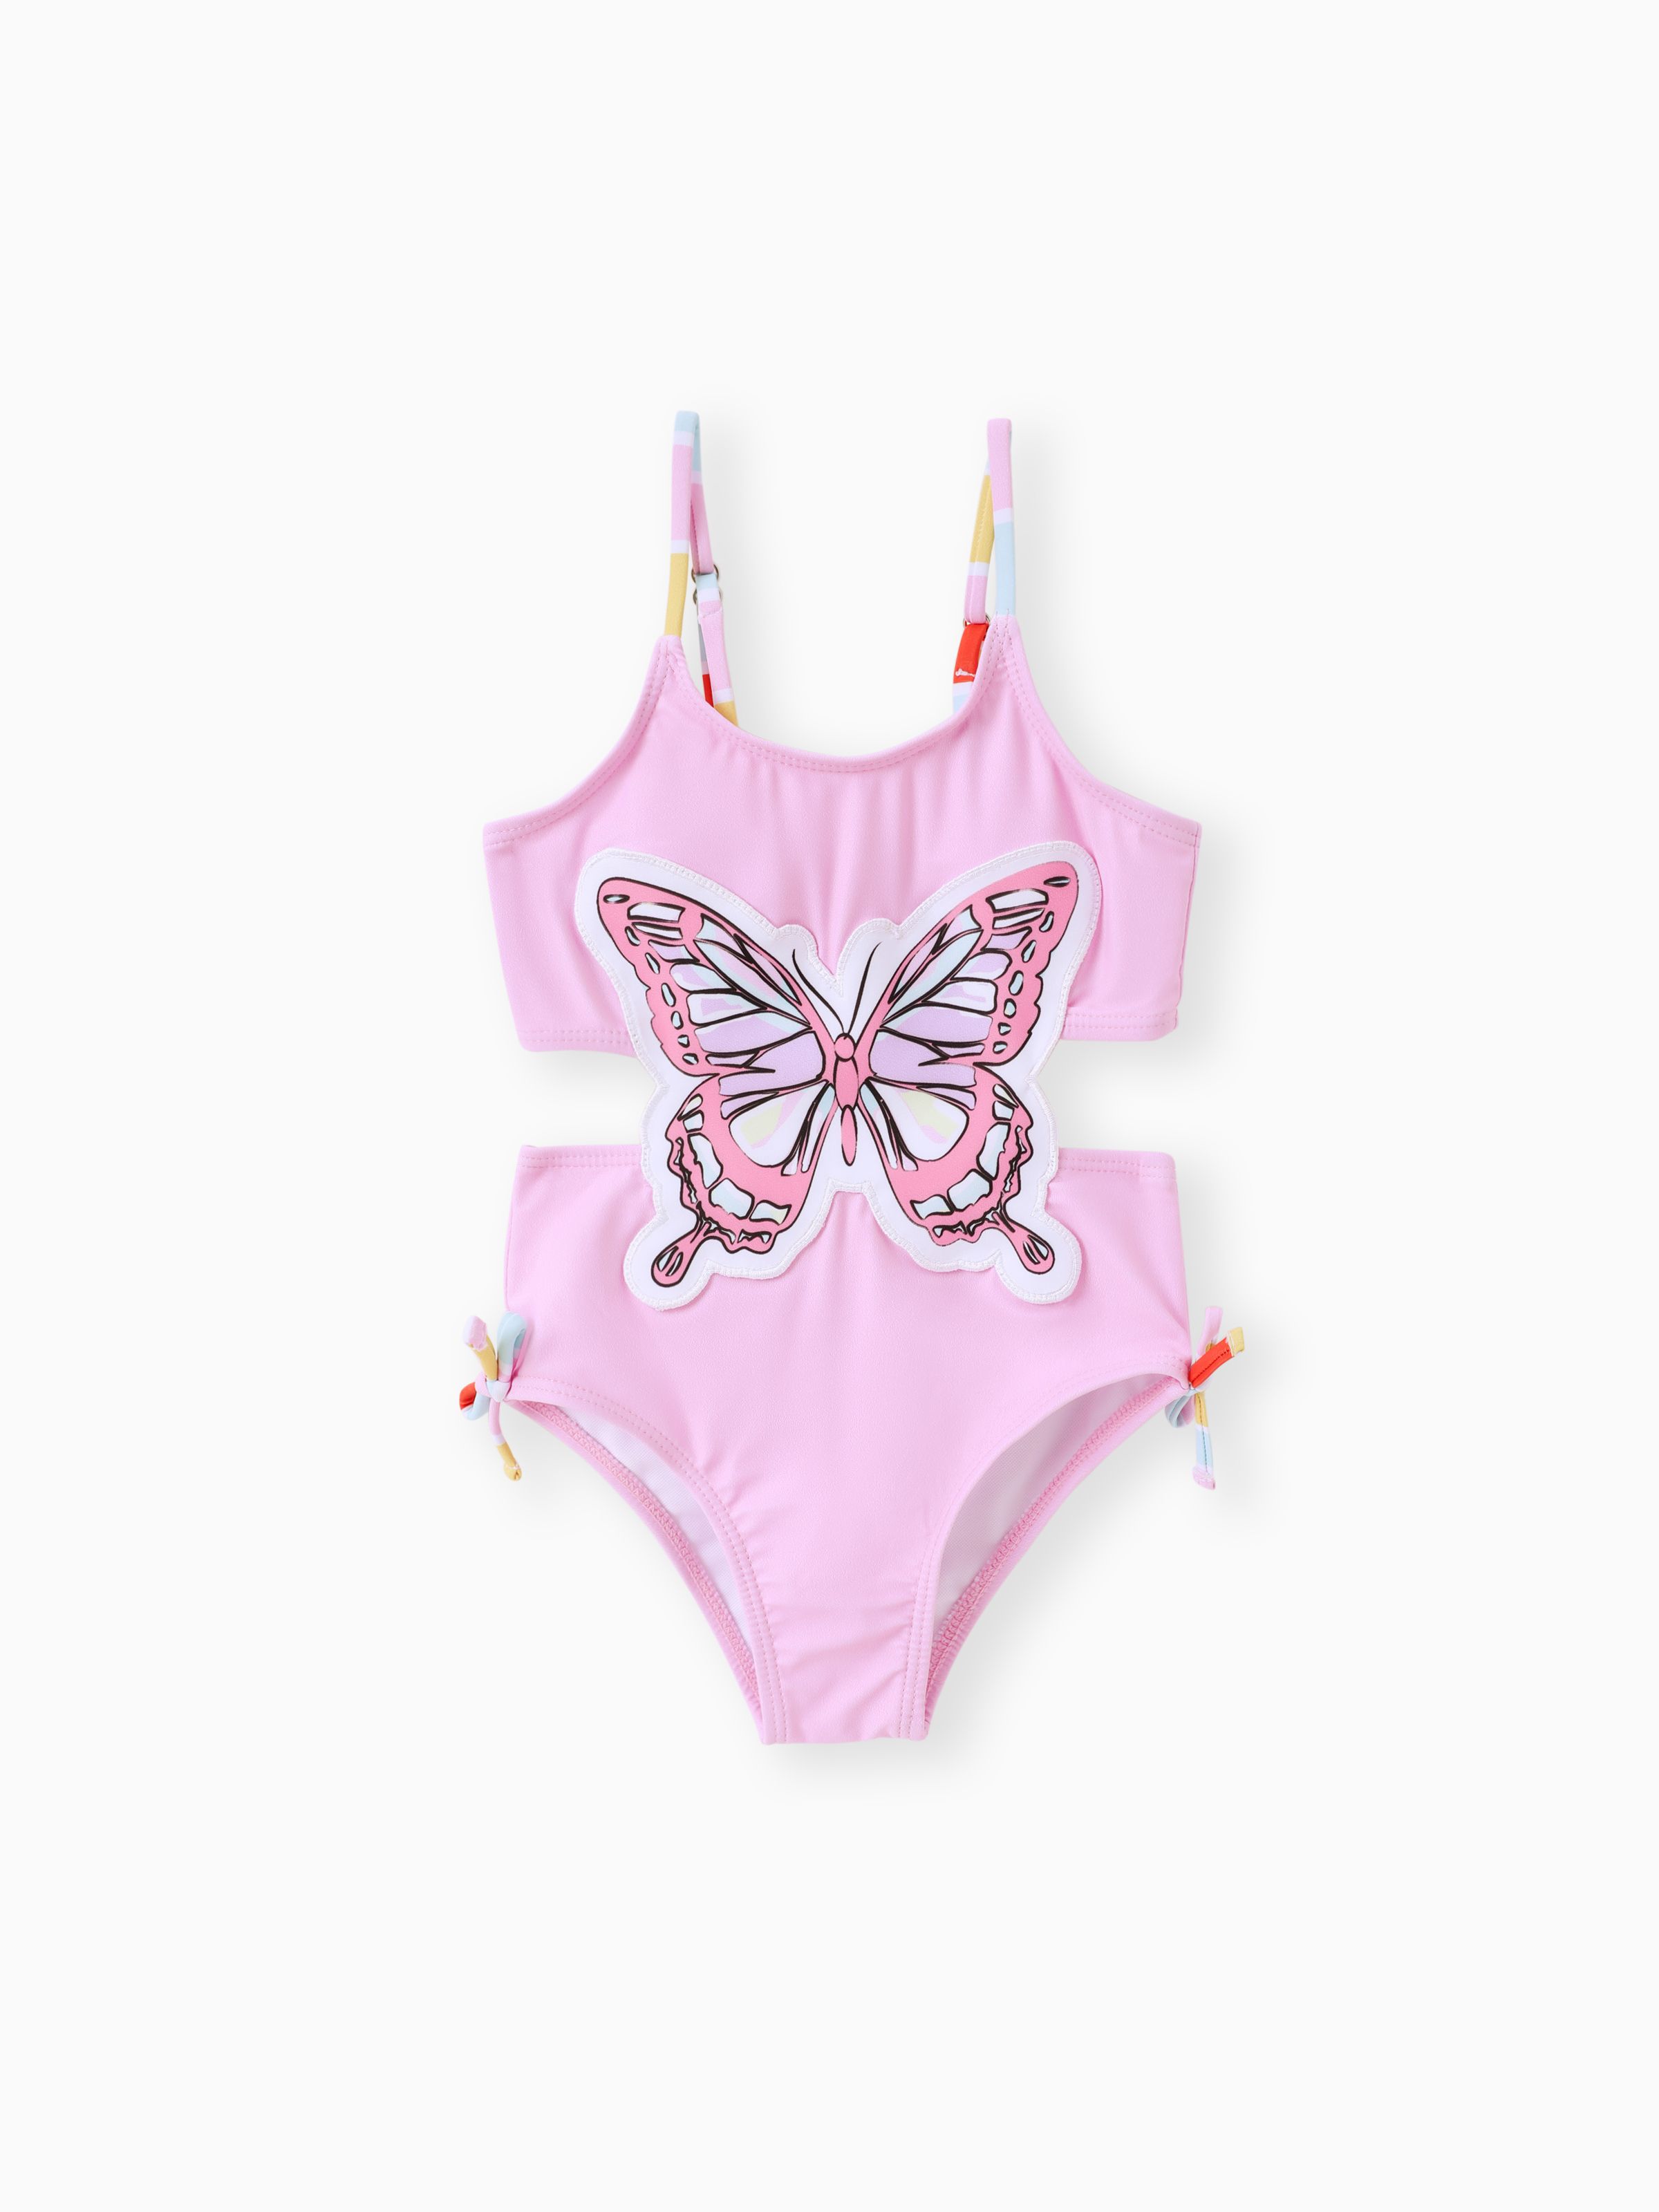 

Sweet Butterfly Toddler Girl Swimsuit - 1pc Animal Pattern Polyester Spandex Swimwear